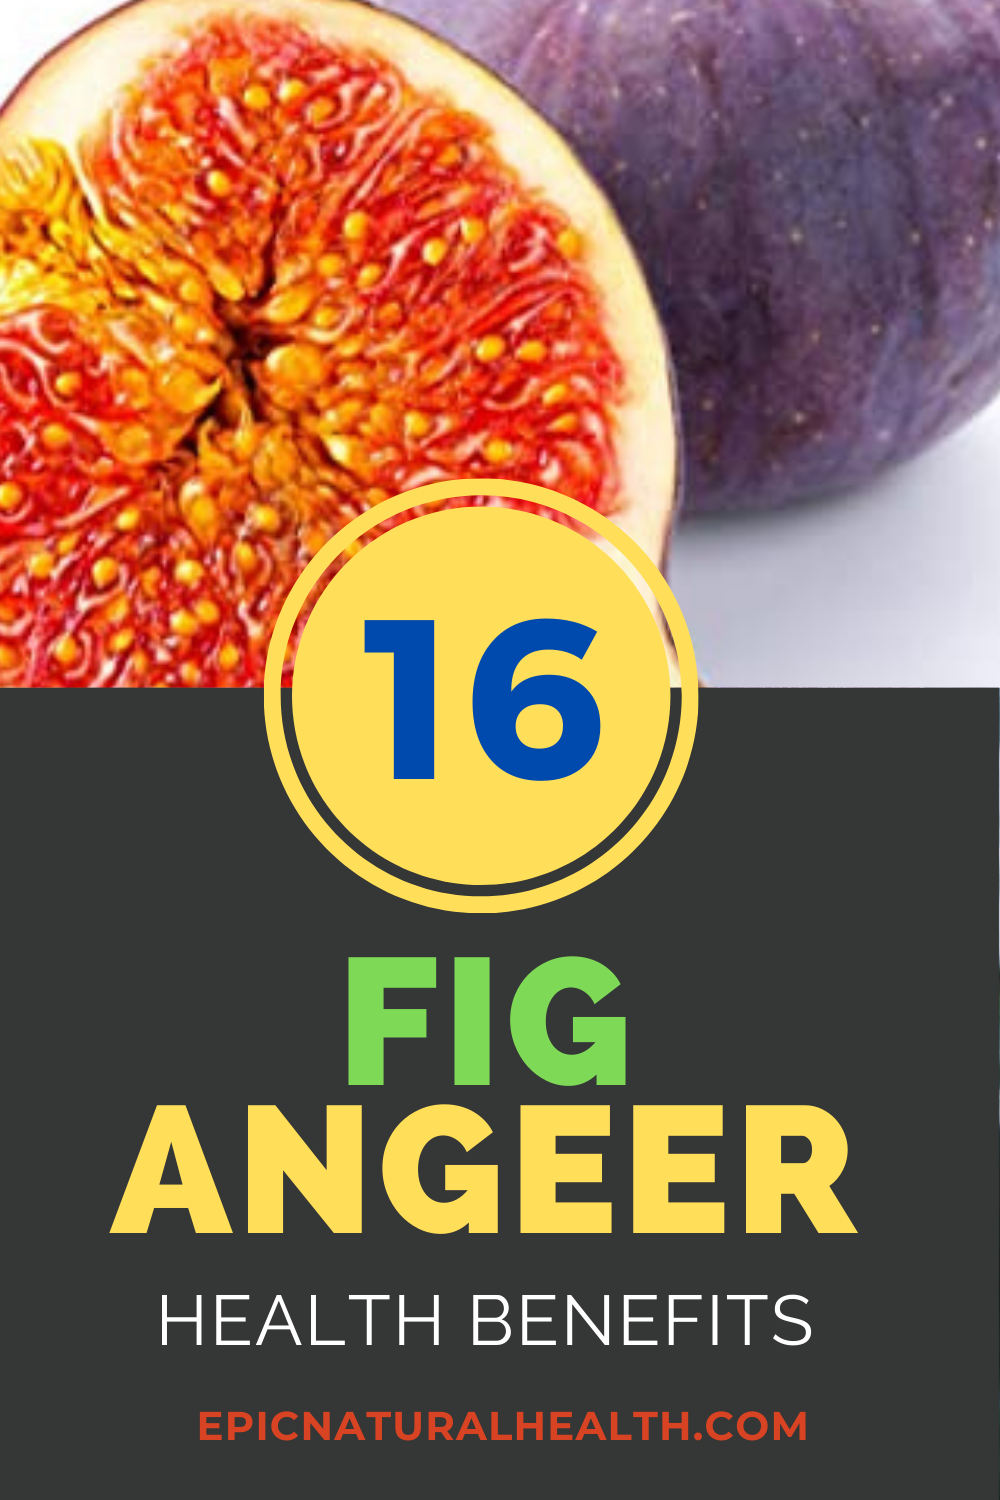 Fig angeer health benefits